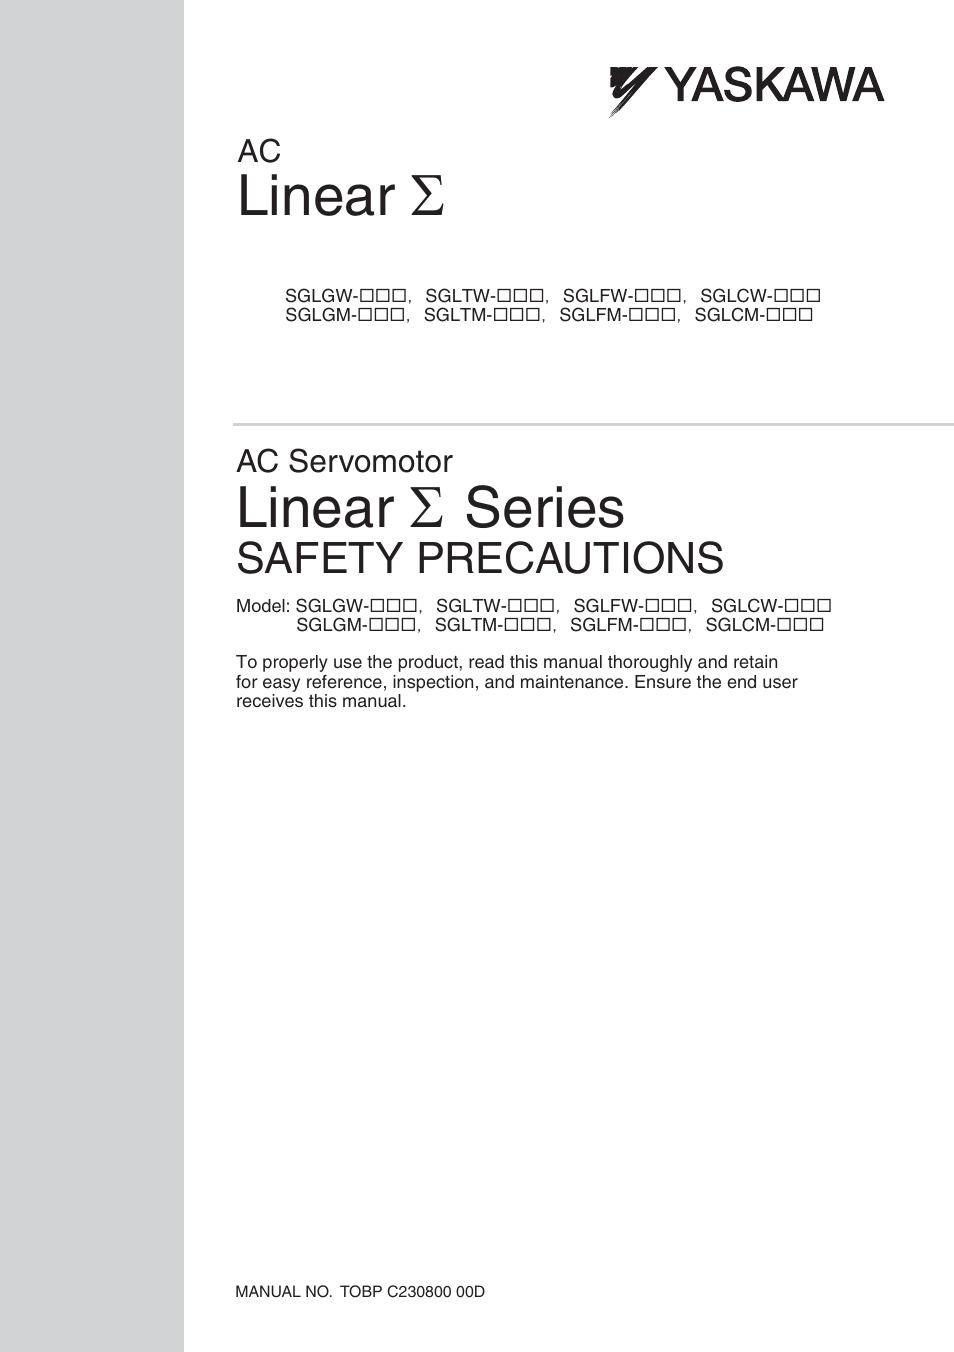 Yaskawa AC Servomotor Linear (Sigma) Series User Manual | 13 pages